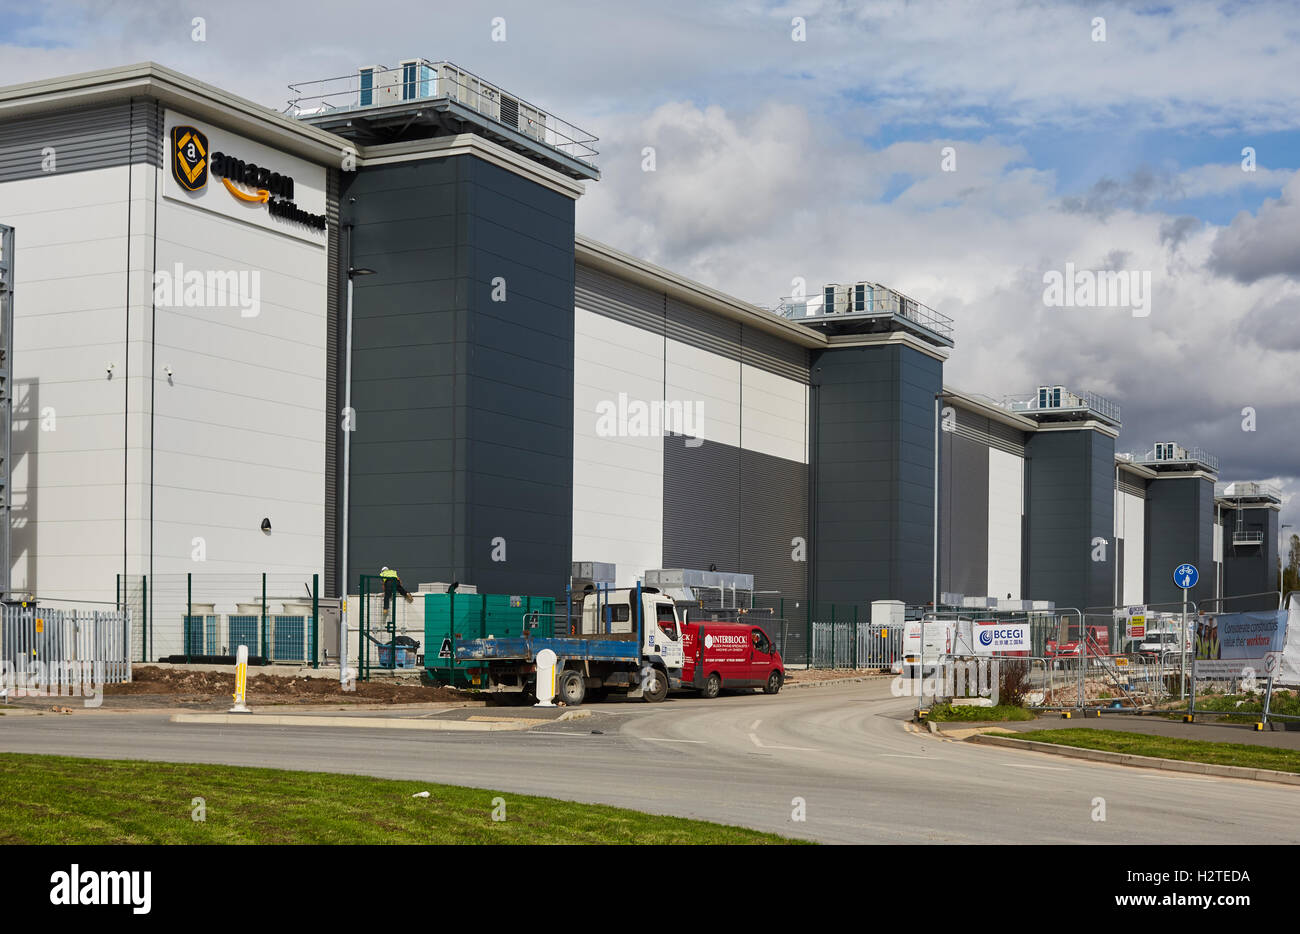 Amazon warehouse company -Fotos und -Bildmaterial in hoher Auflösung – Alamy